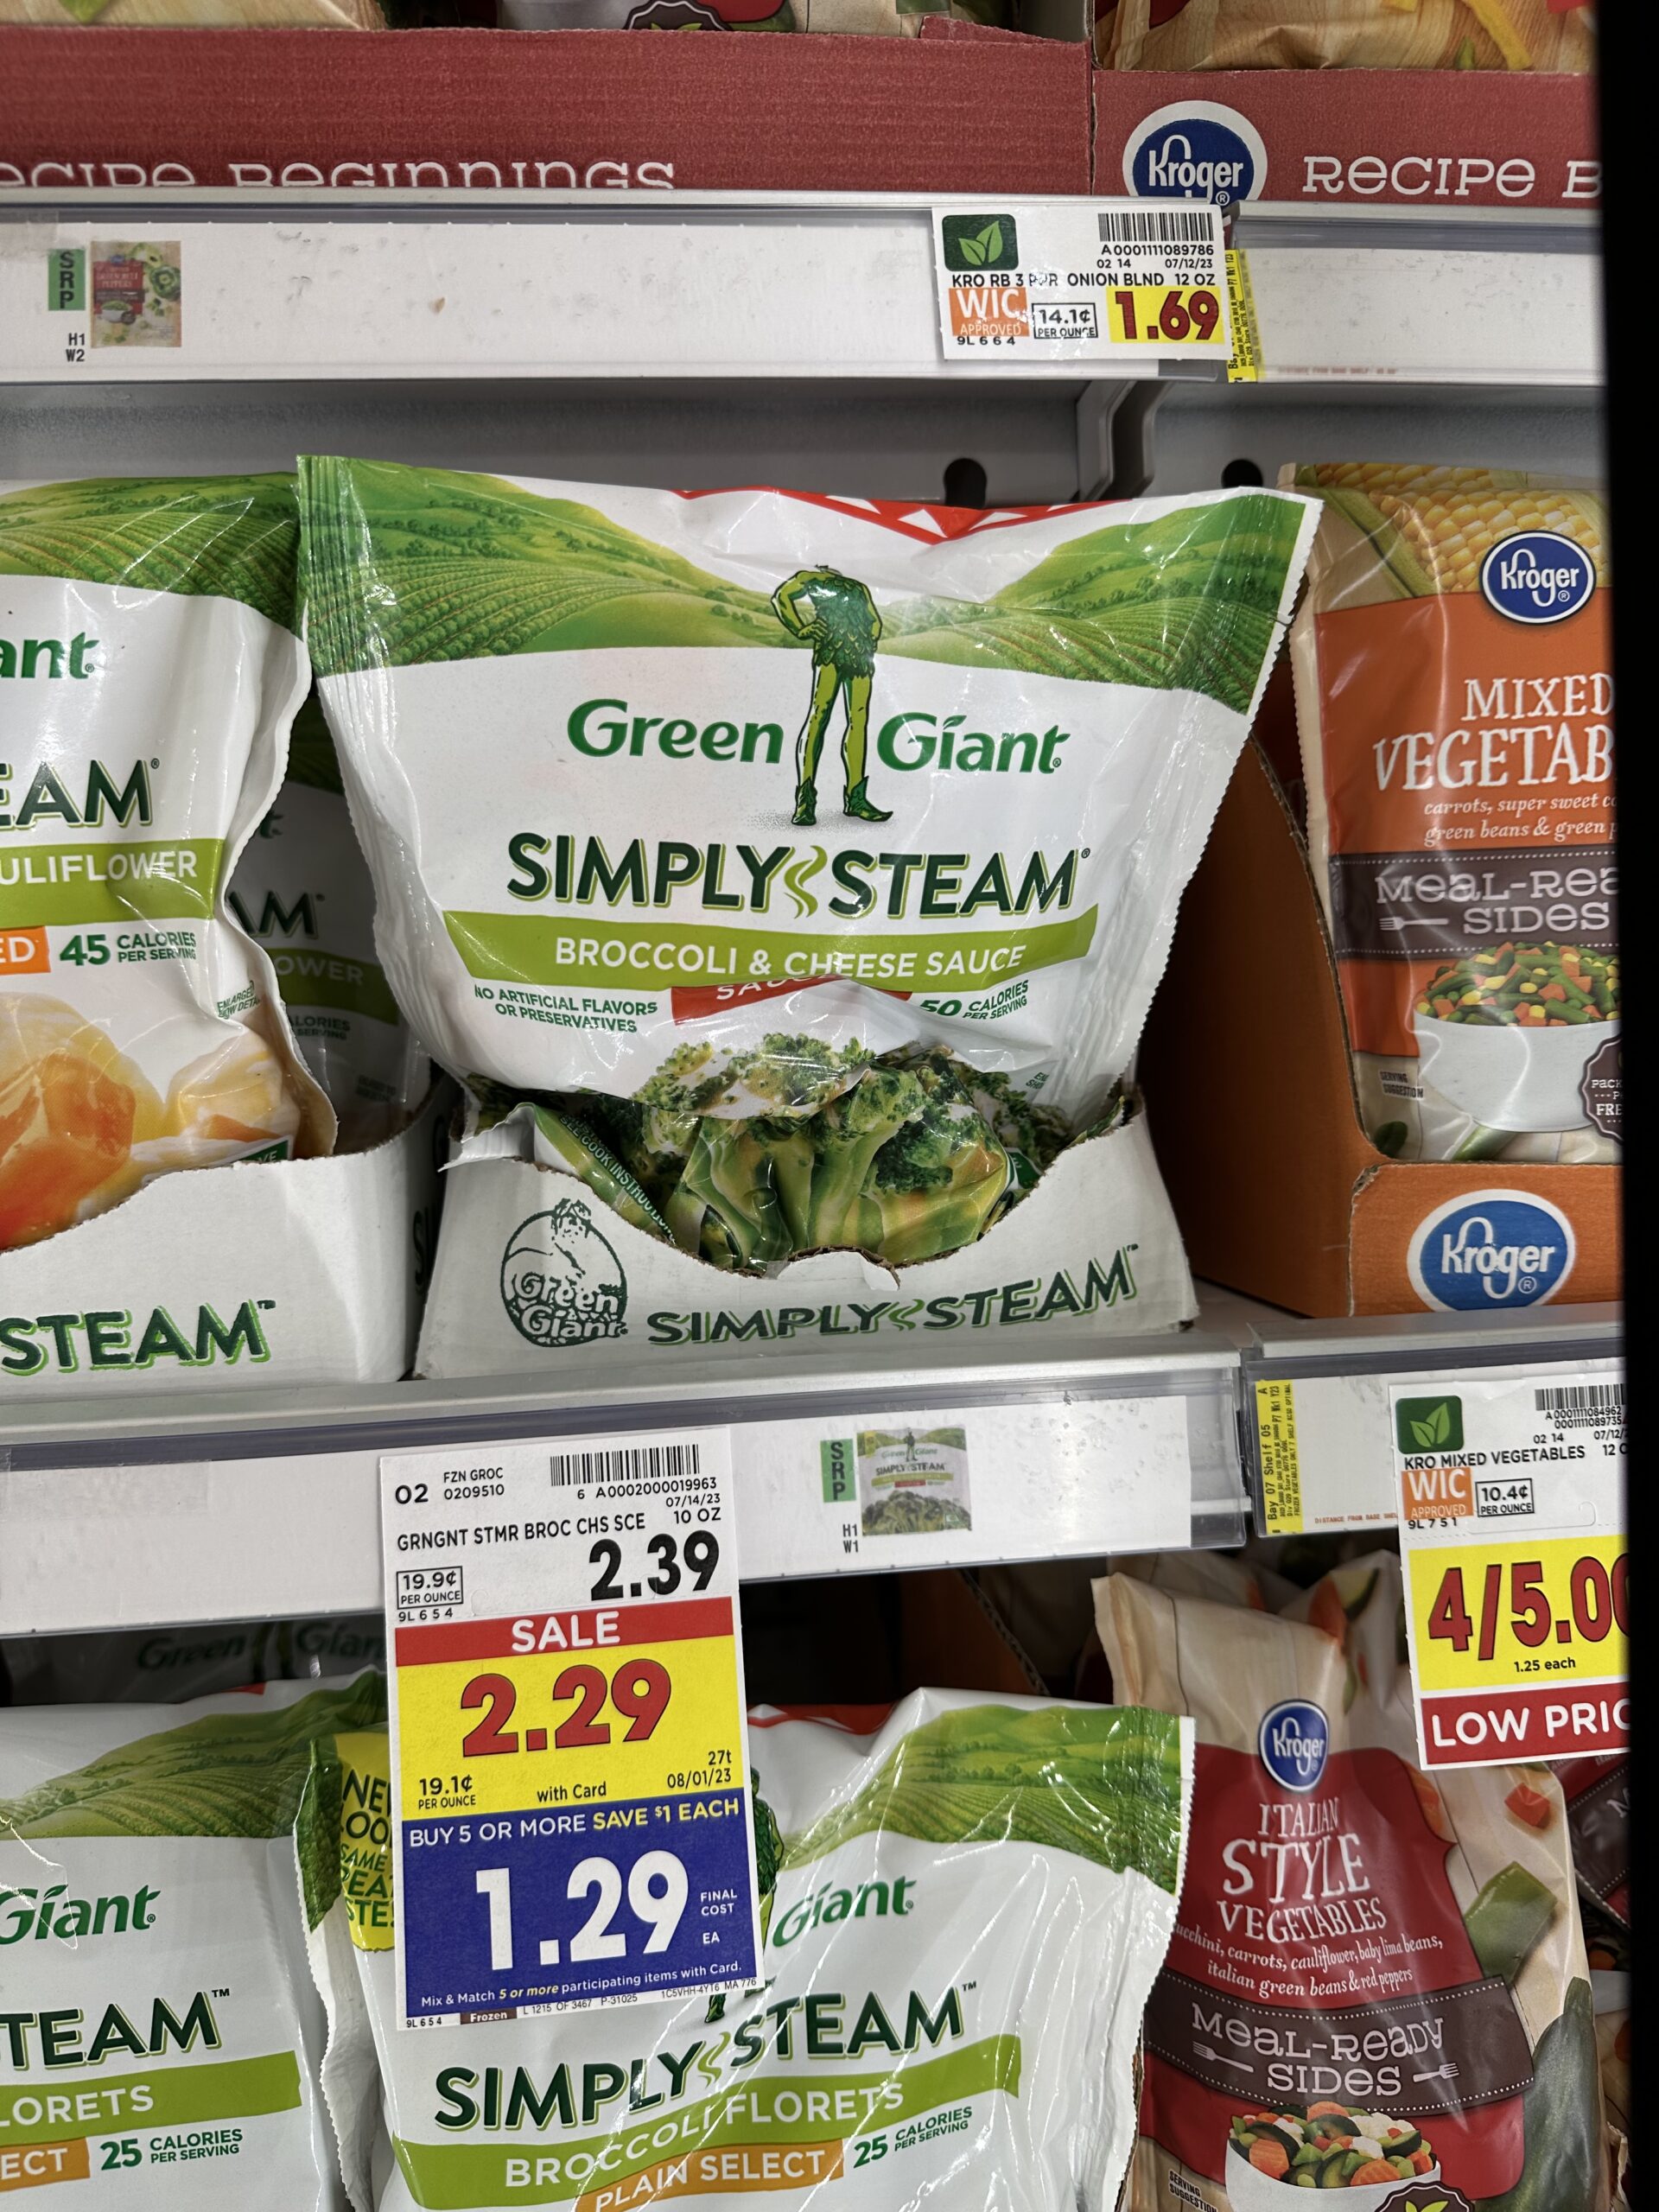 green giant simply steam kroger shelf image 4